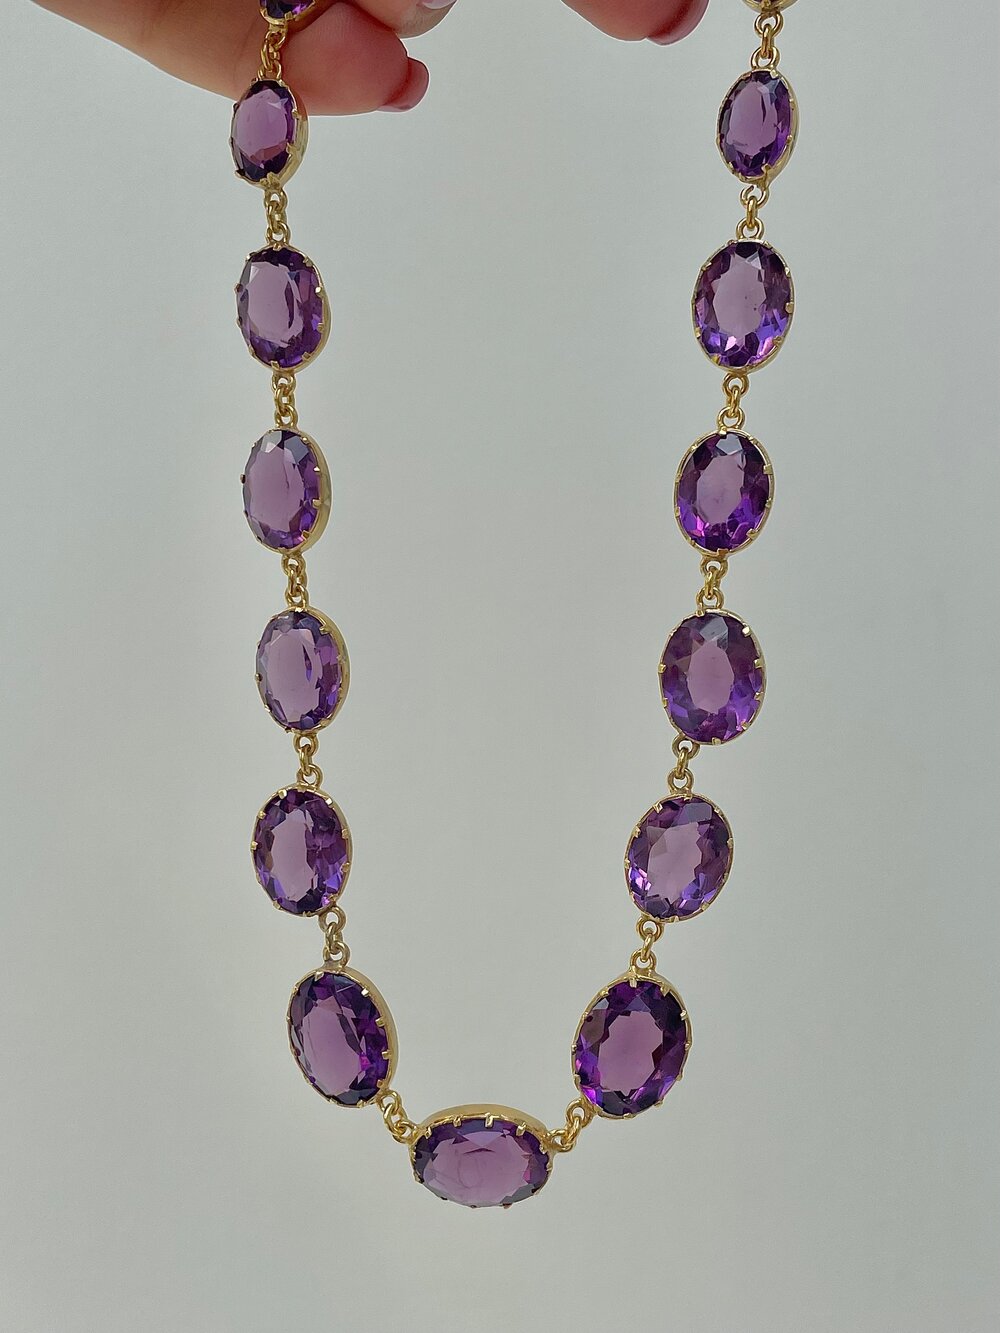 Anna Wintour Amethyst Riviere Necklace - 14k Gold Vermeil Victorian Style Necklace